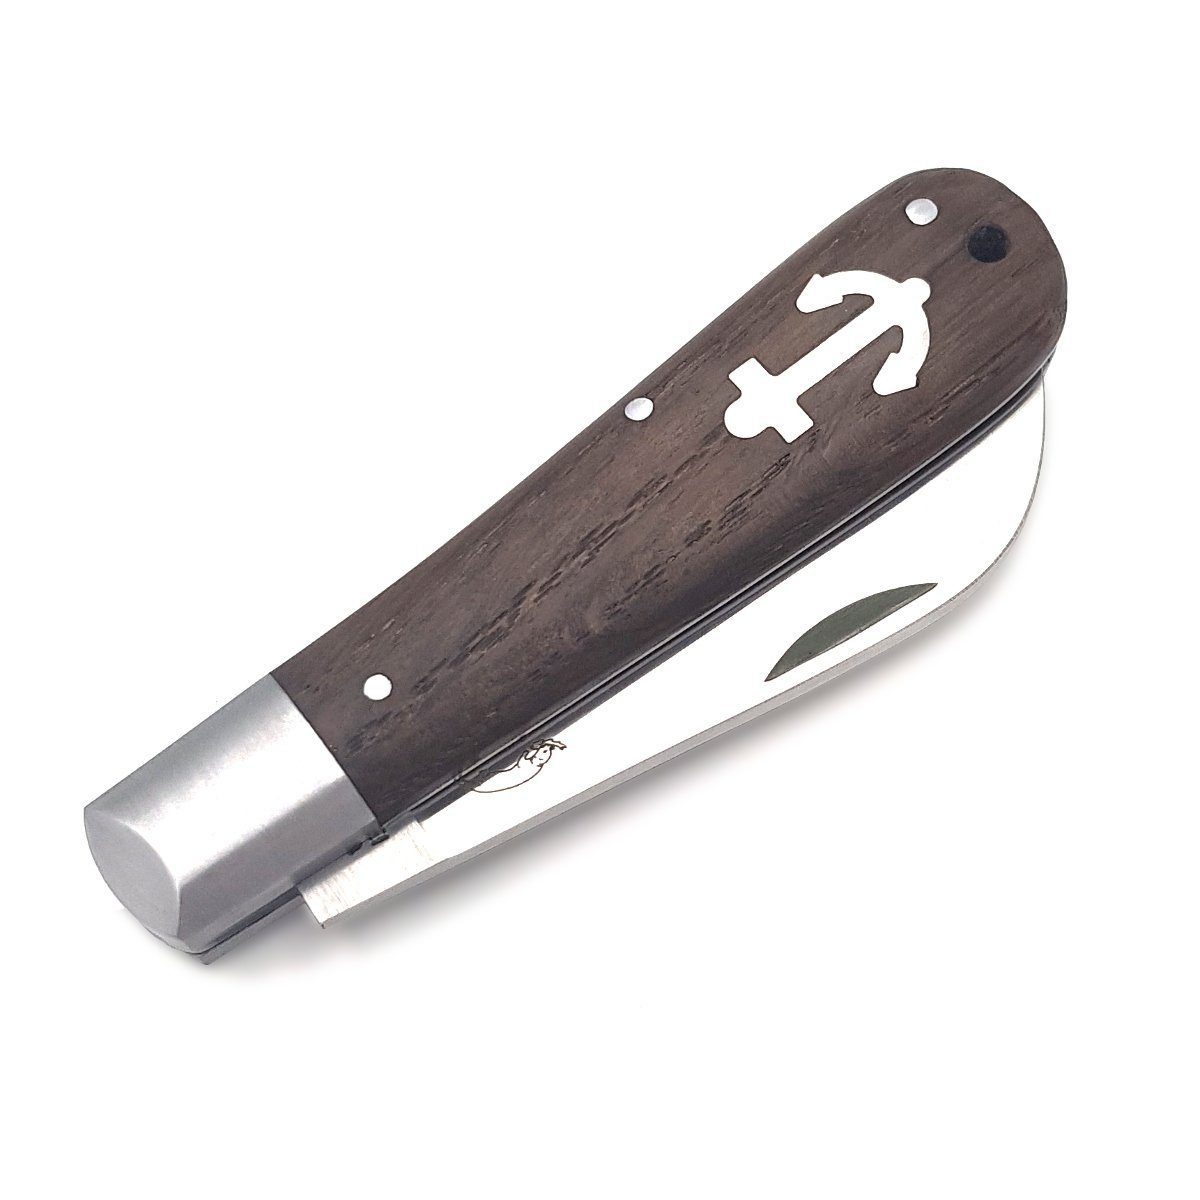 Otter Messer Taschenmesser Anker-Messer groß Carbonstahlklinge, Slipjoint Räuchereiche